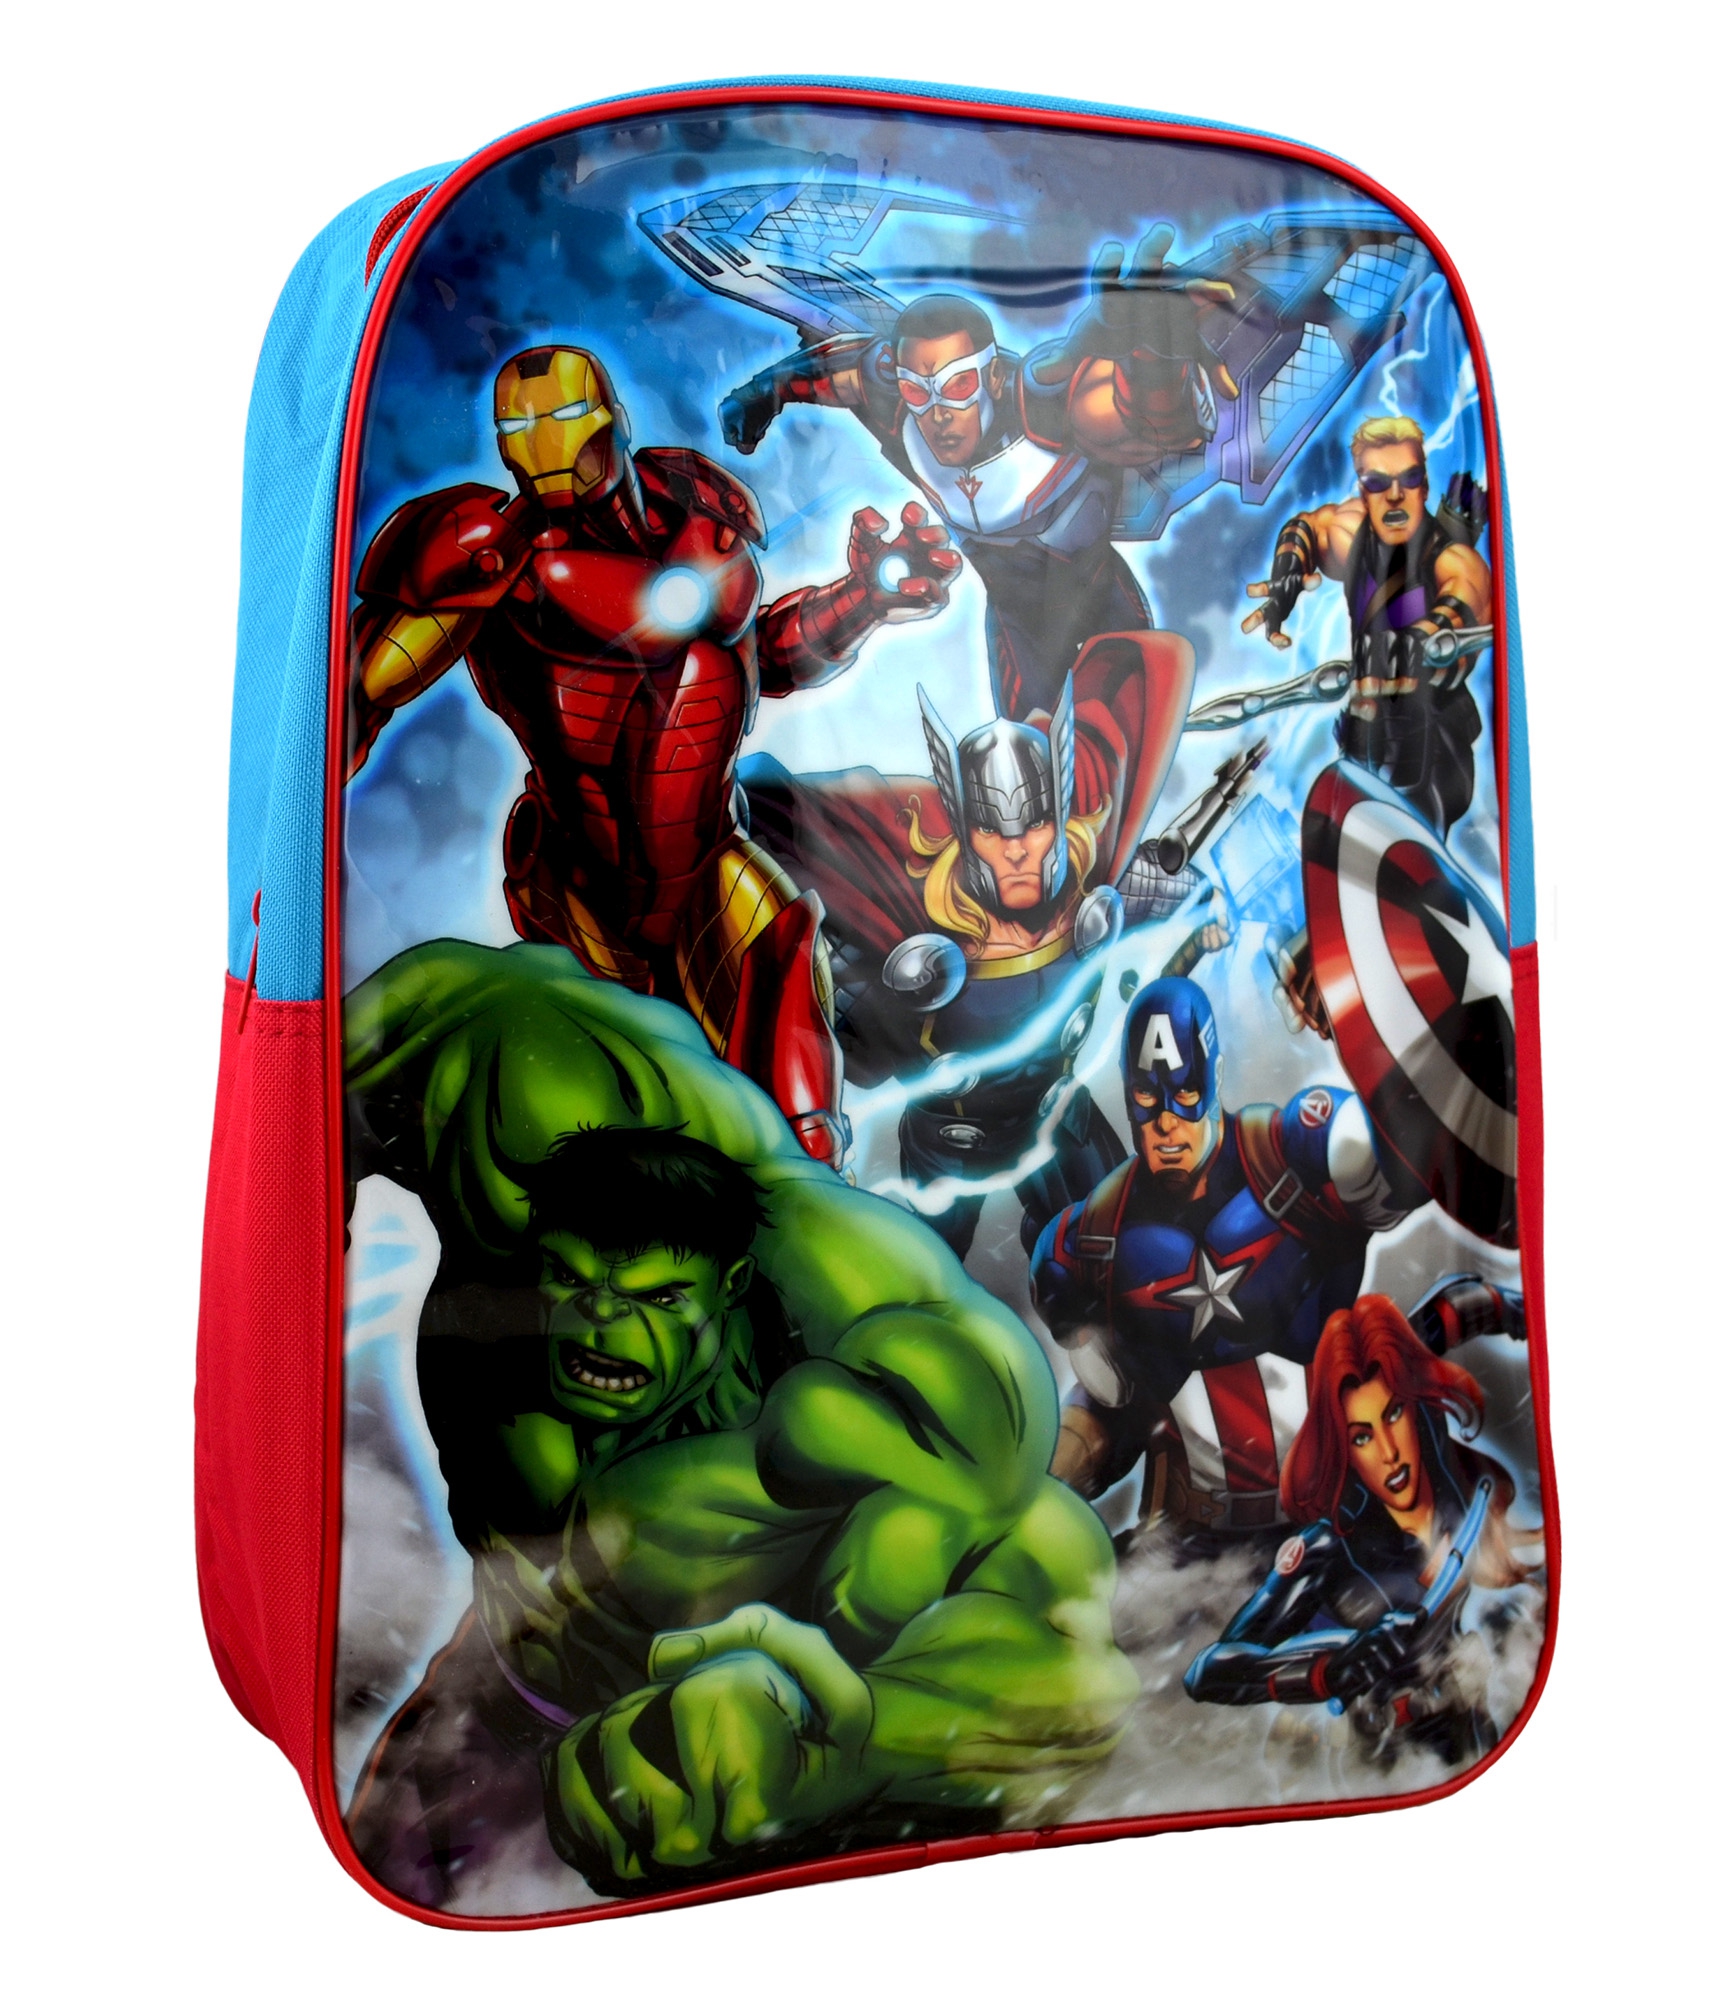 Avengers 'Force' Arch School Bag Rucksack Backpack